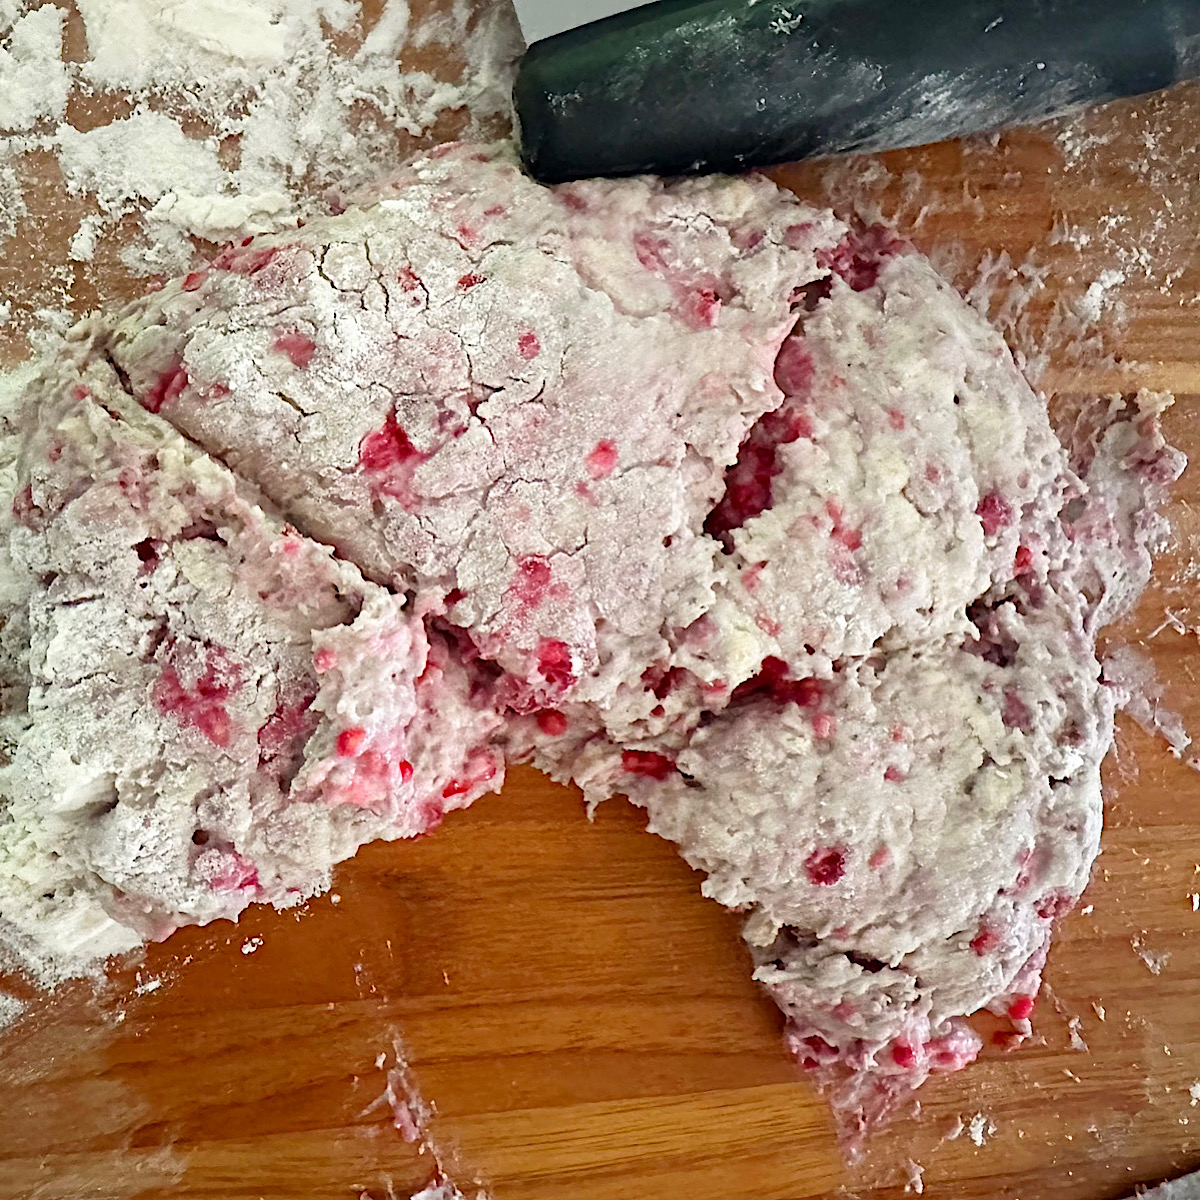 Raspberry scone dough on a cutting board cut into wedges.